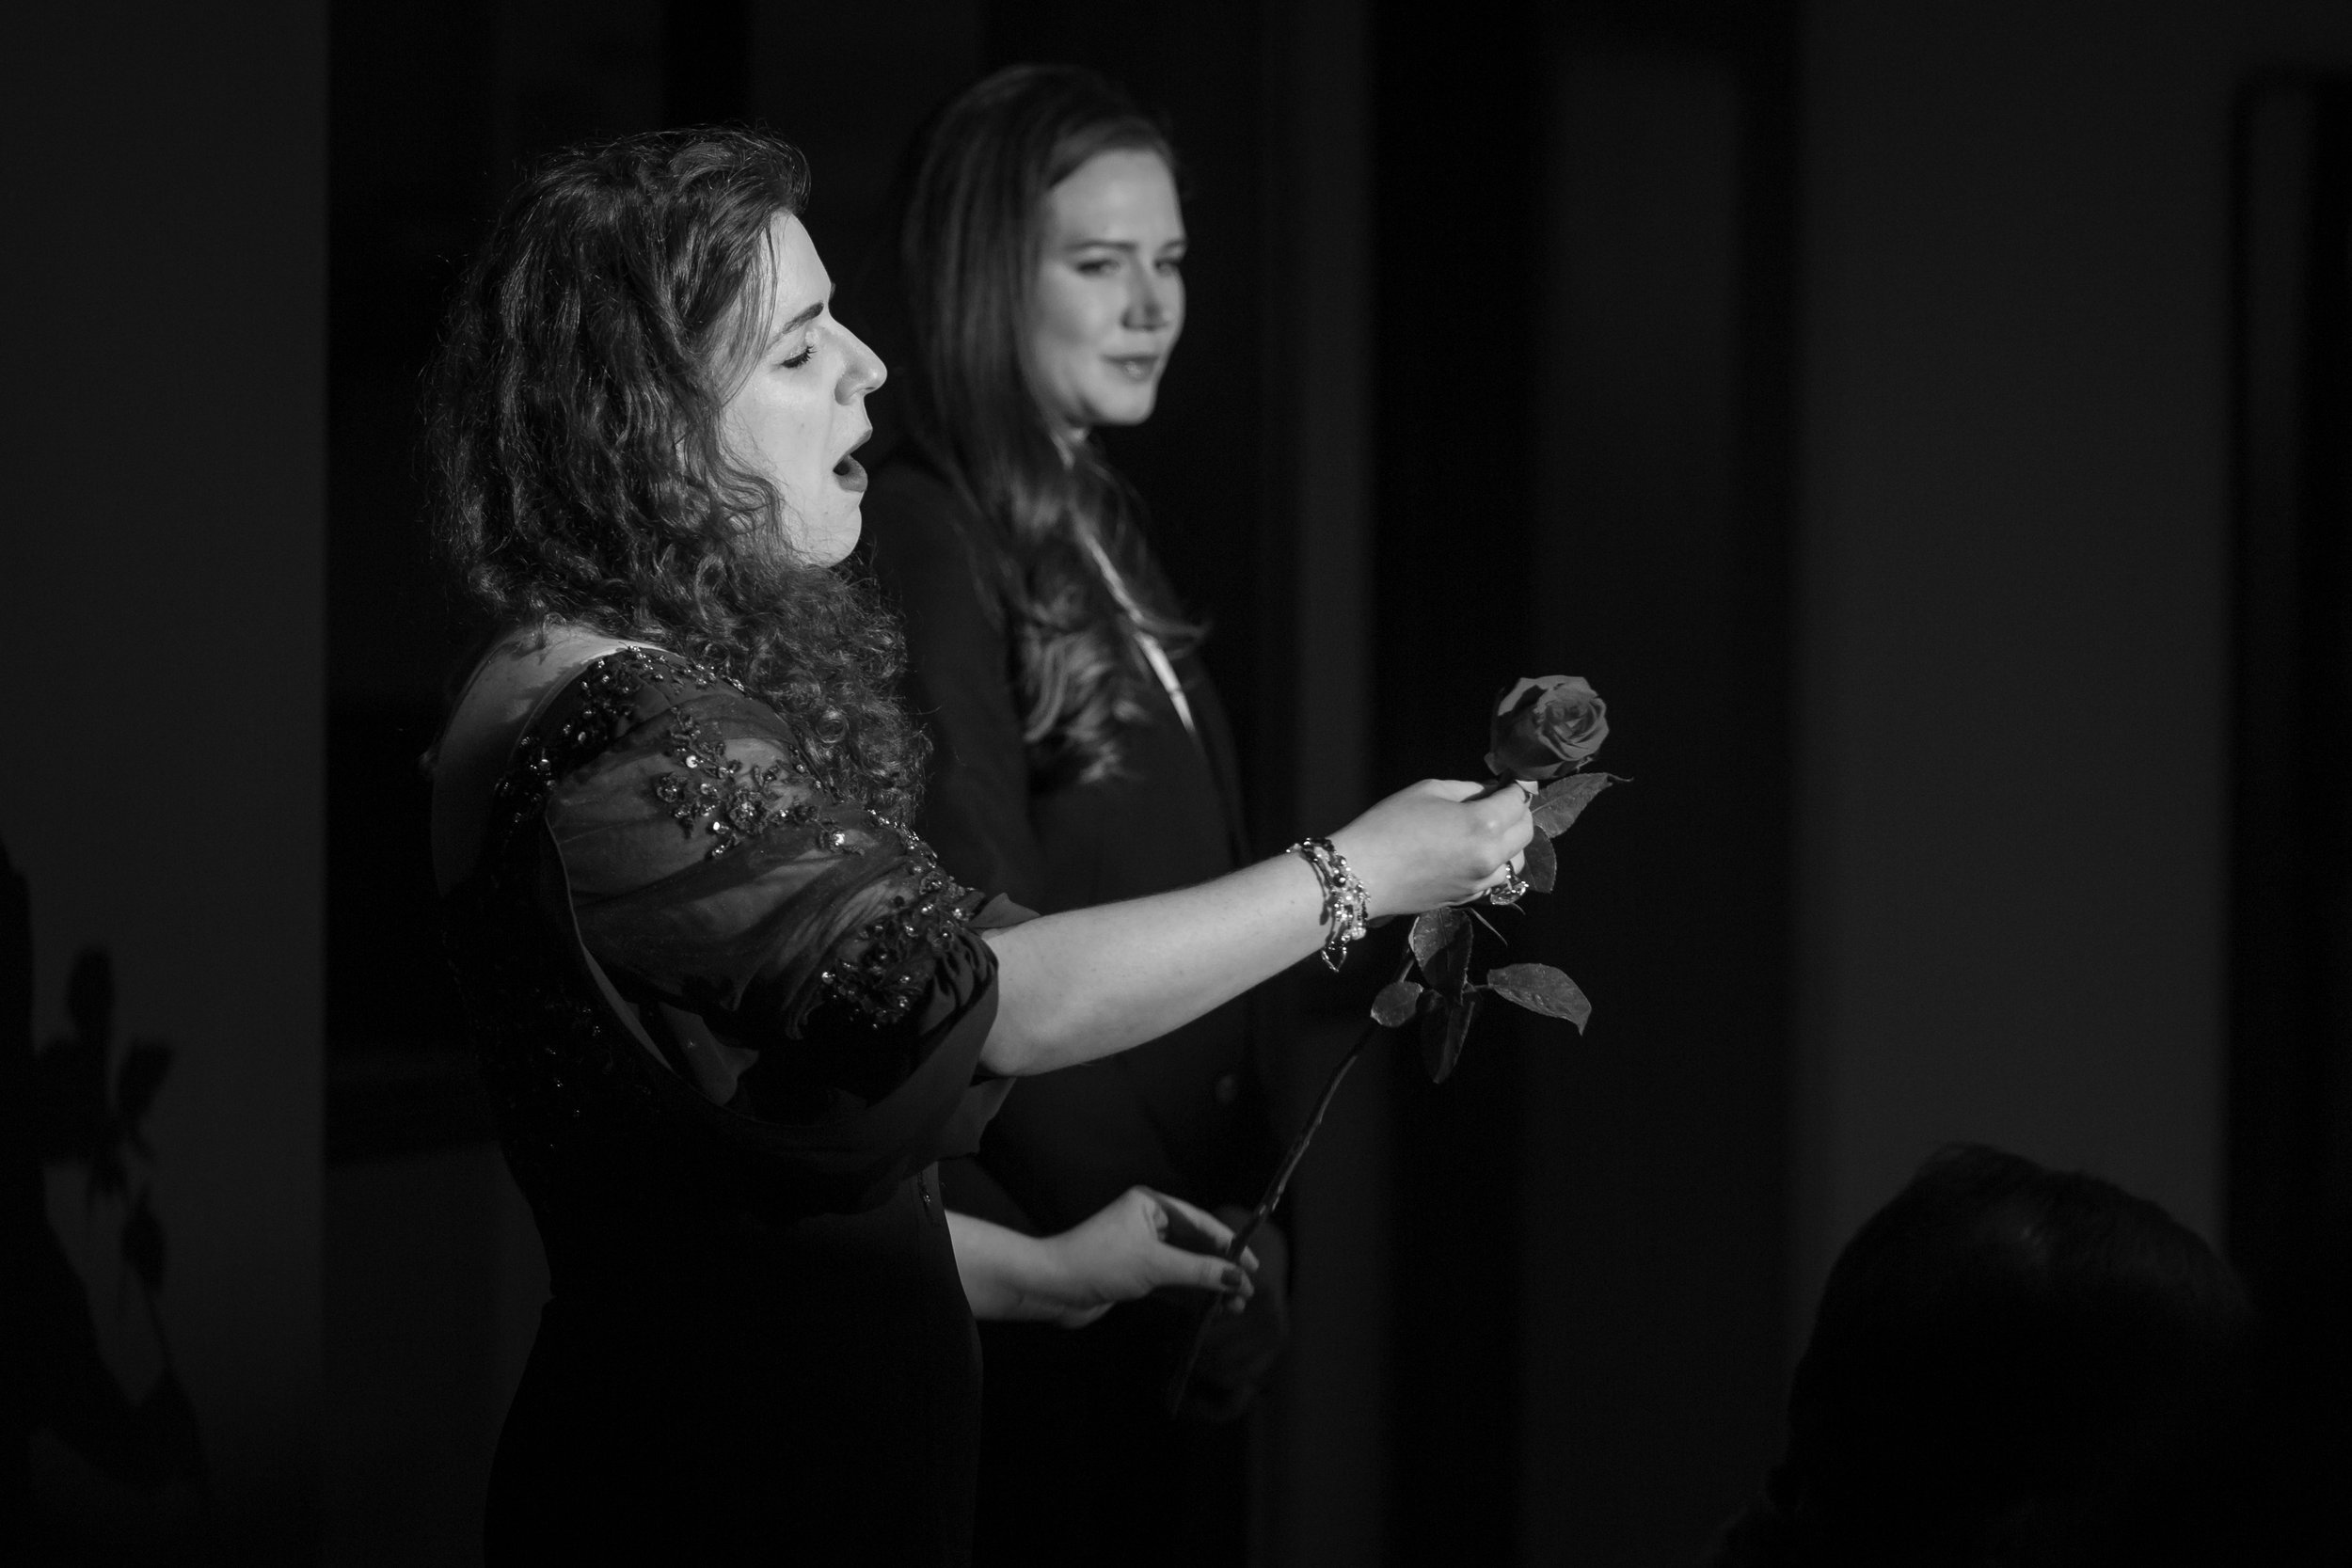 Presentation of the Rose, with mezzo-soprano Kirsten Scott as Octavian